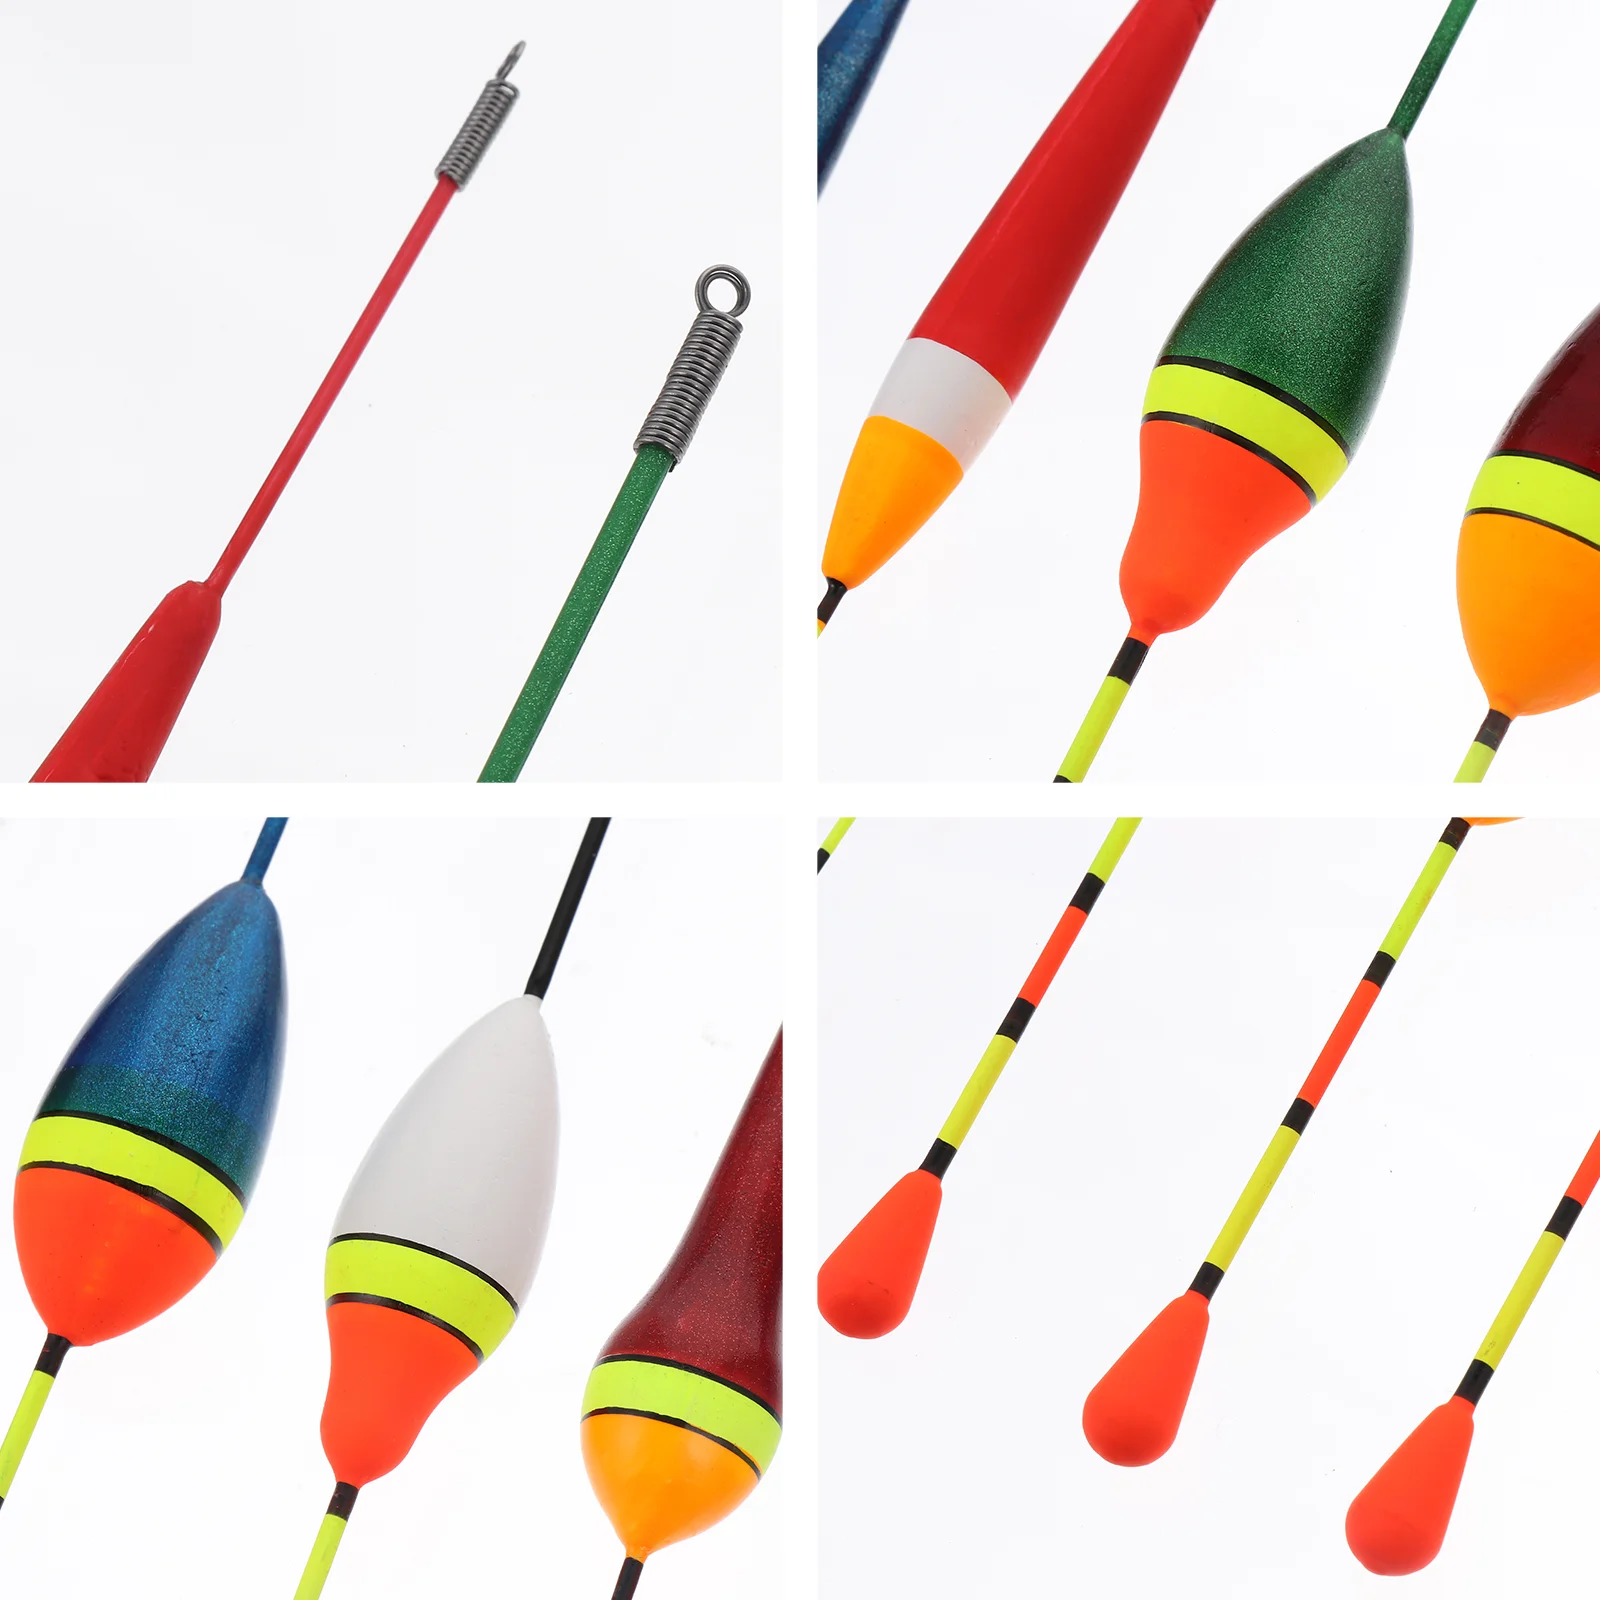 https://ae01.alicdn.com/kf/Sdabe79d296b247fc89560370b0c60e39K/10-Pcs-Small-Float-Buoy-Bobber-Fishing-Tackle-Tool-Gadgets-Floaters-Bobbers-Foam-Drift-Foamed.jpg